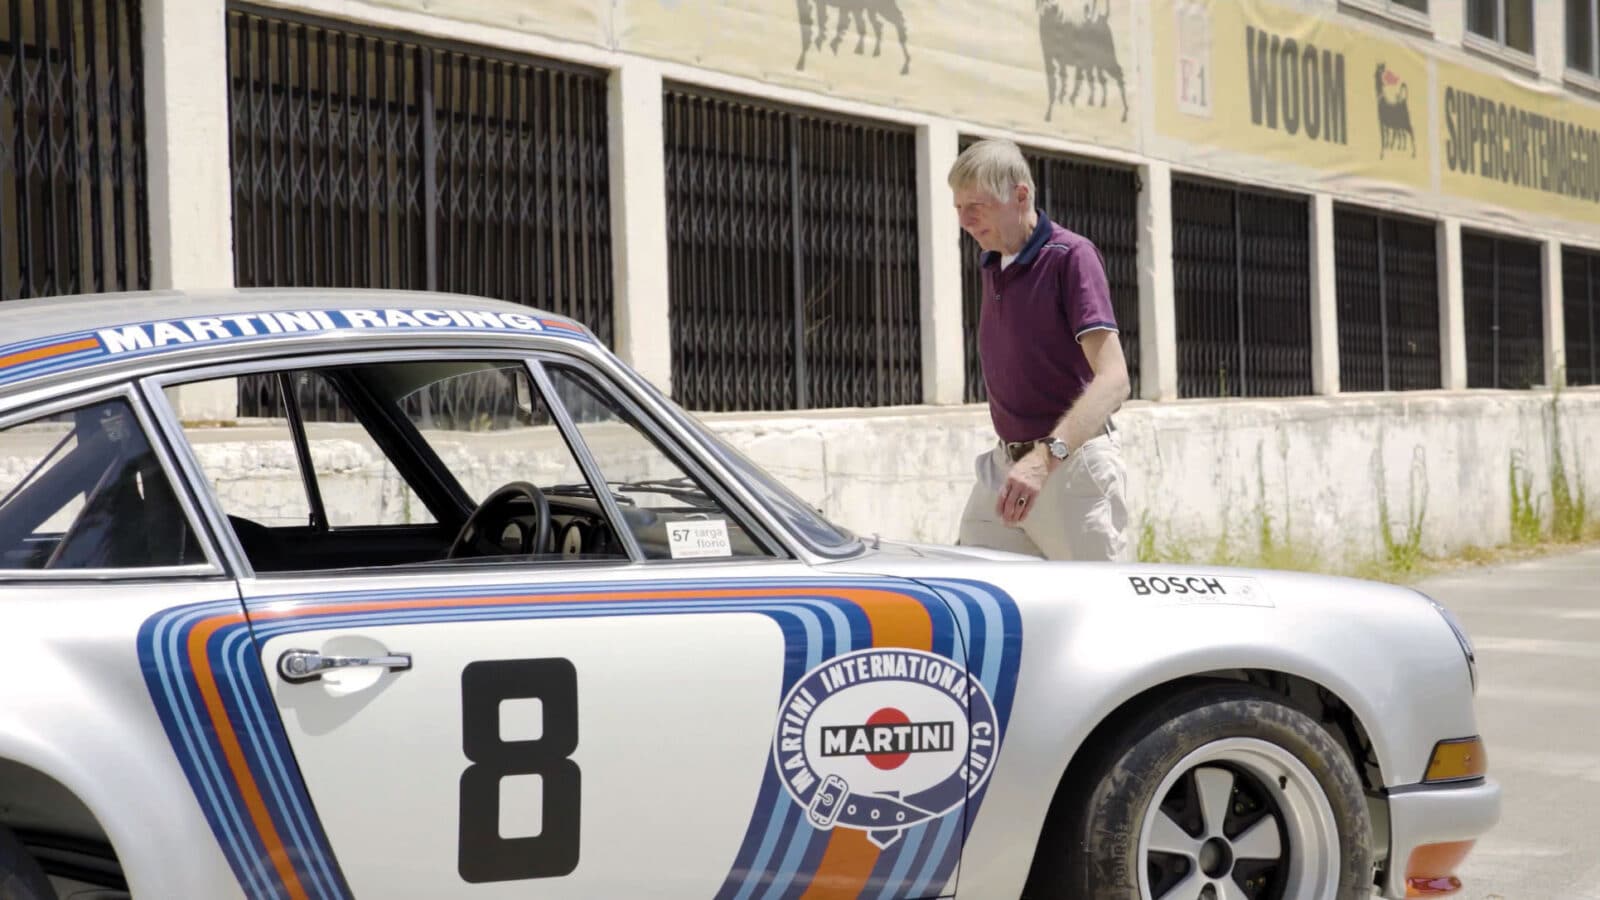 Gijis van Lennep with Porsche R6